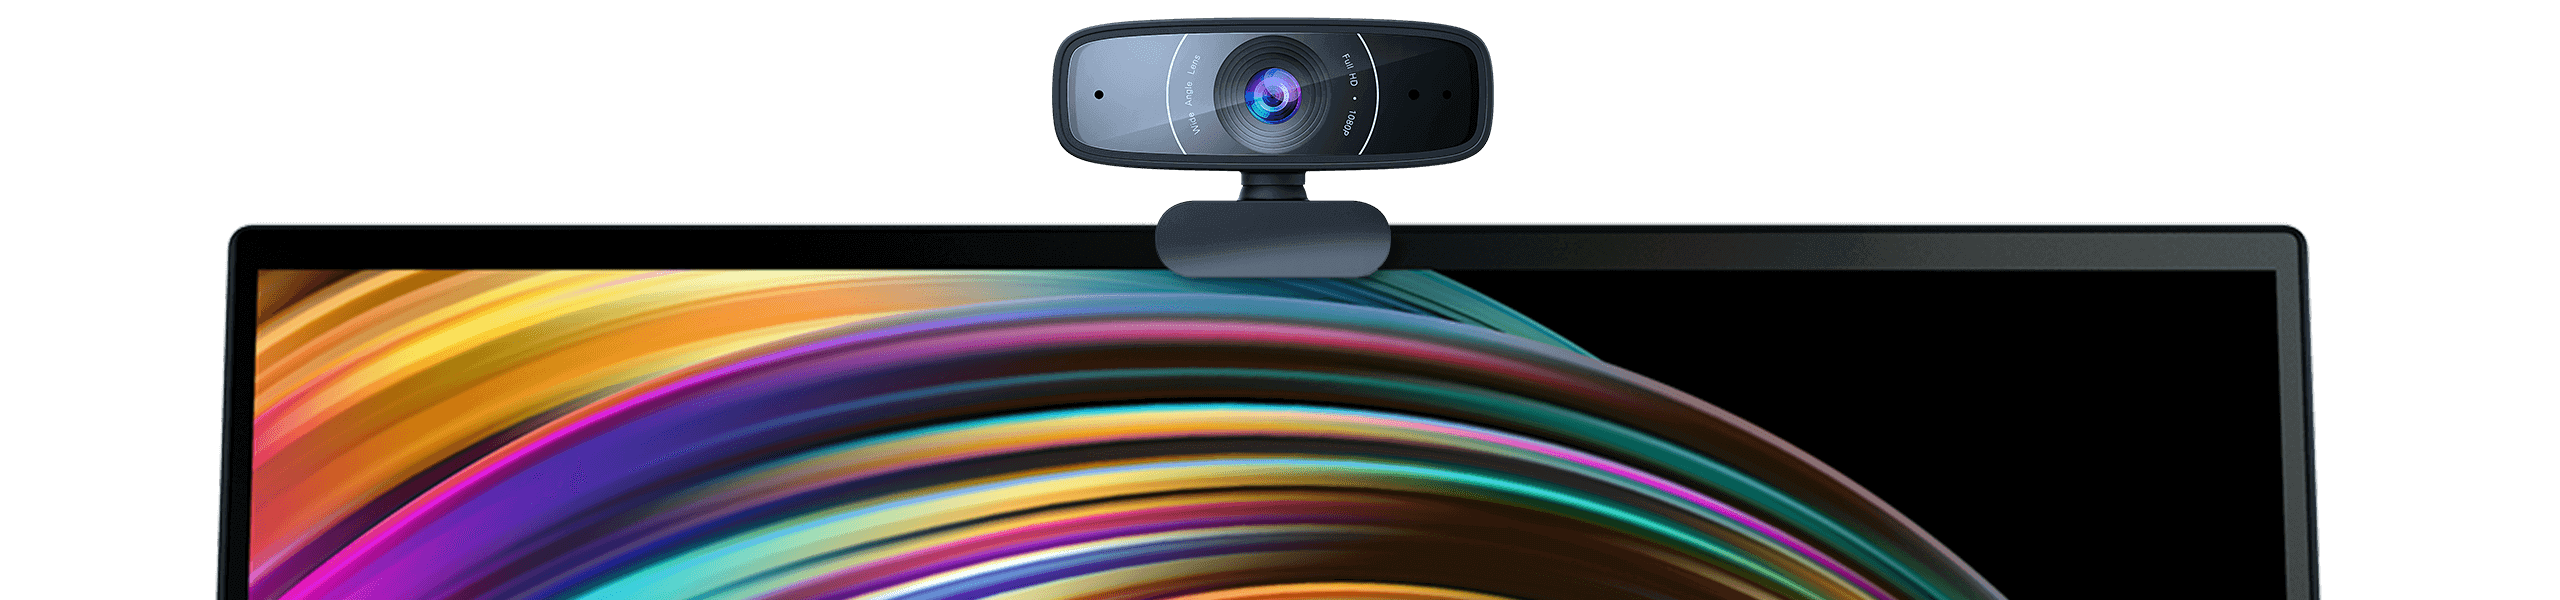 ASUS-Webcam-C3-Streaming-Kits